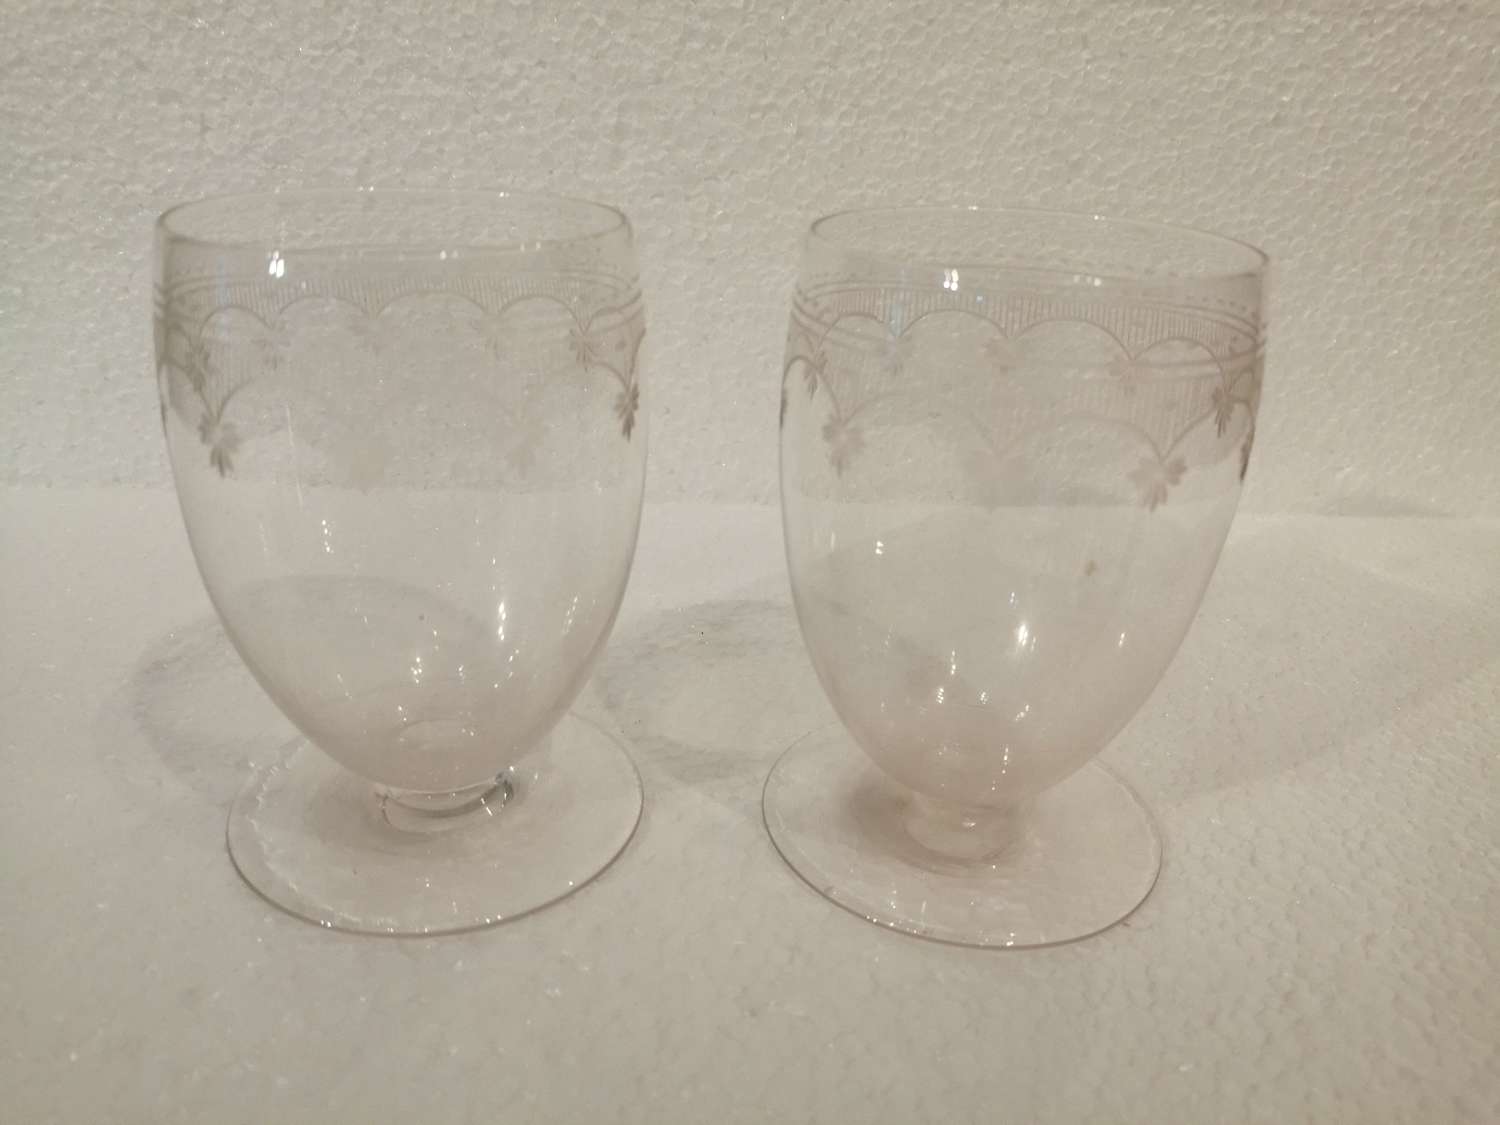 A charming pair of 19th century engraved lemonade glasses